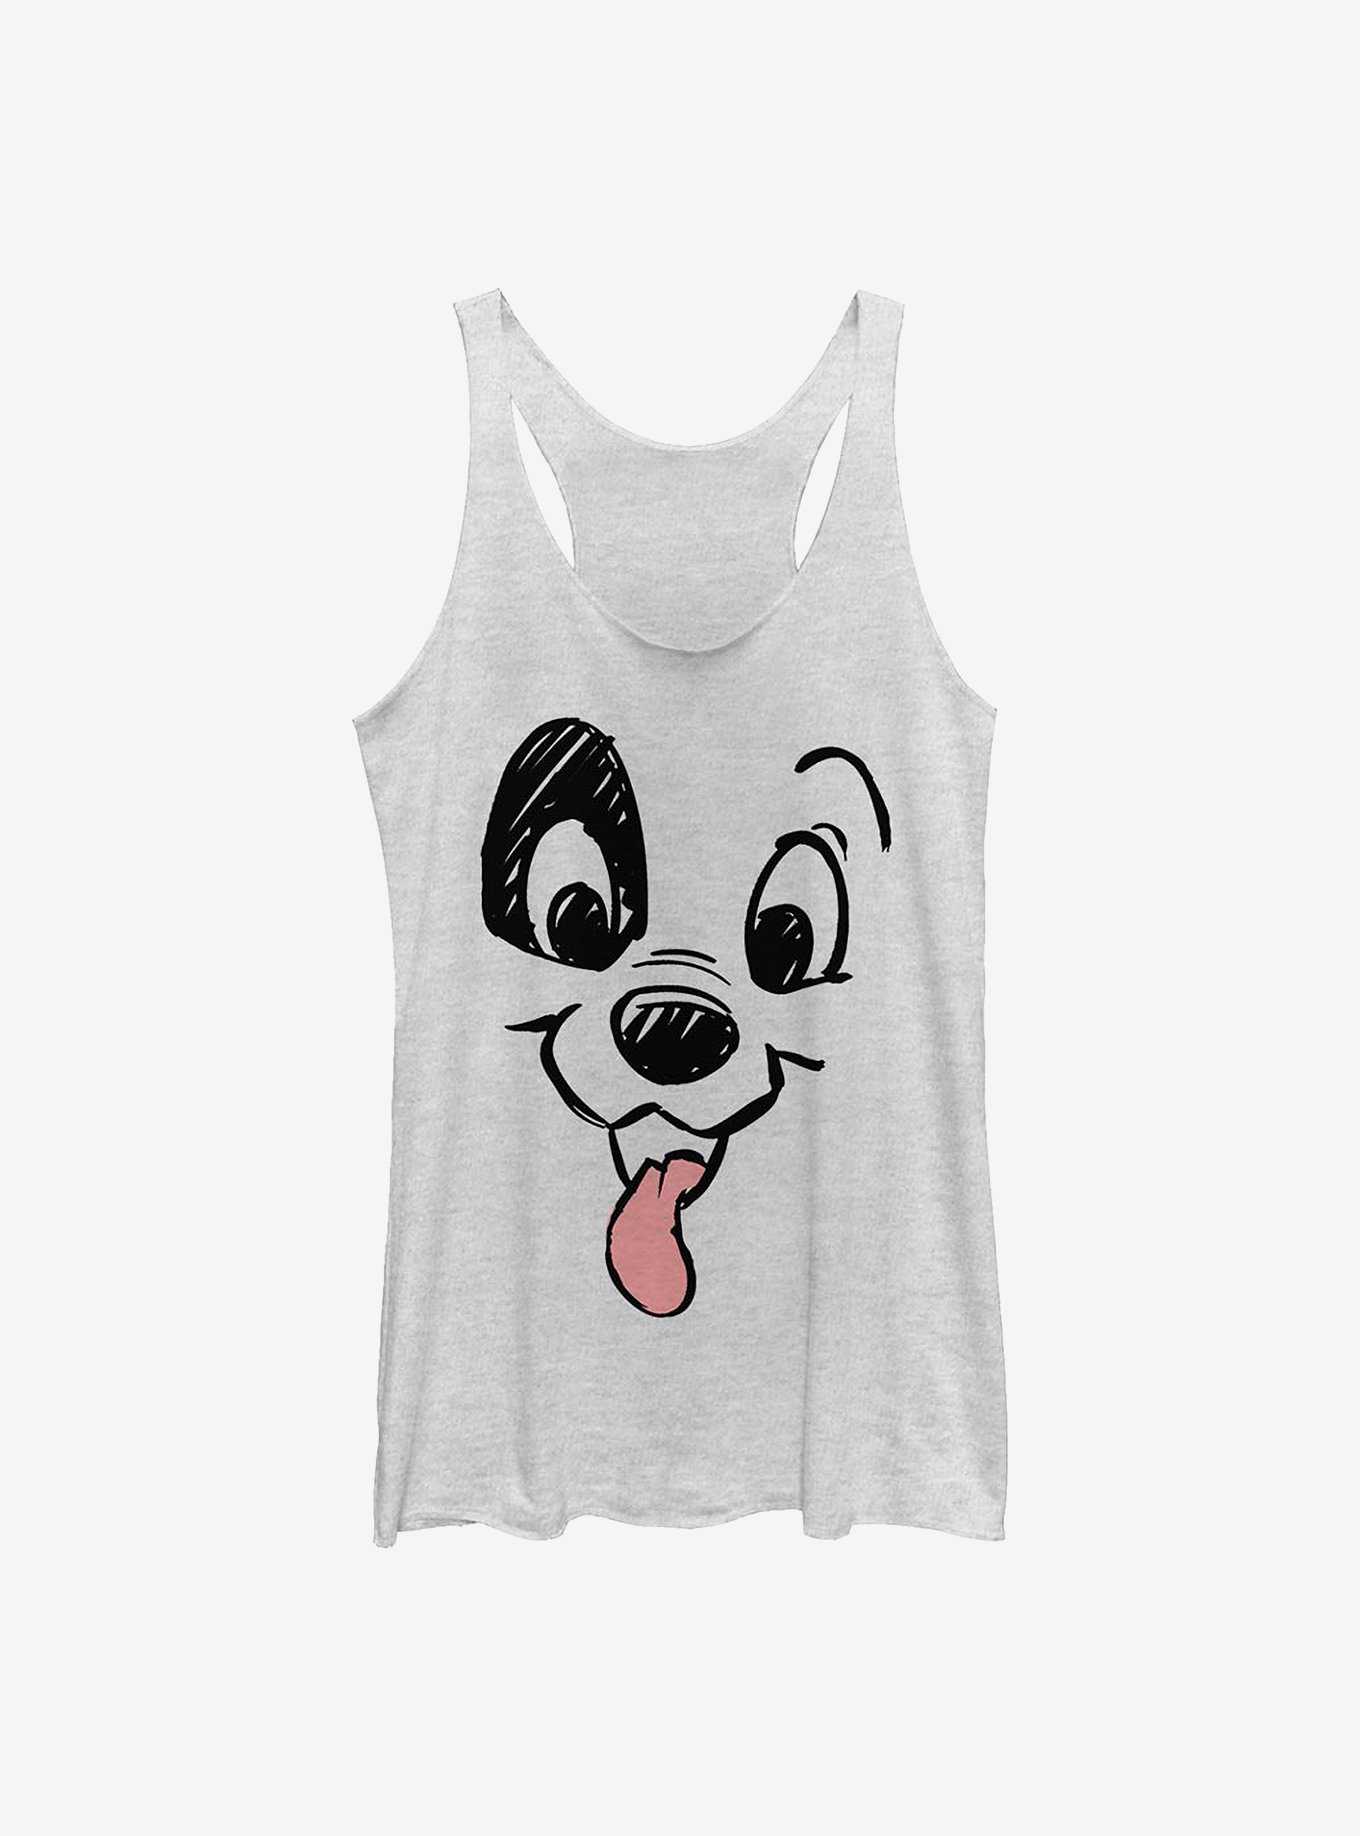 Disney 101 Dalmatians, Cruella Women T-Shirt XS-XL -  - Javo